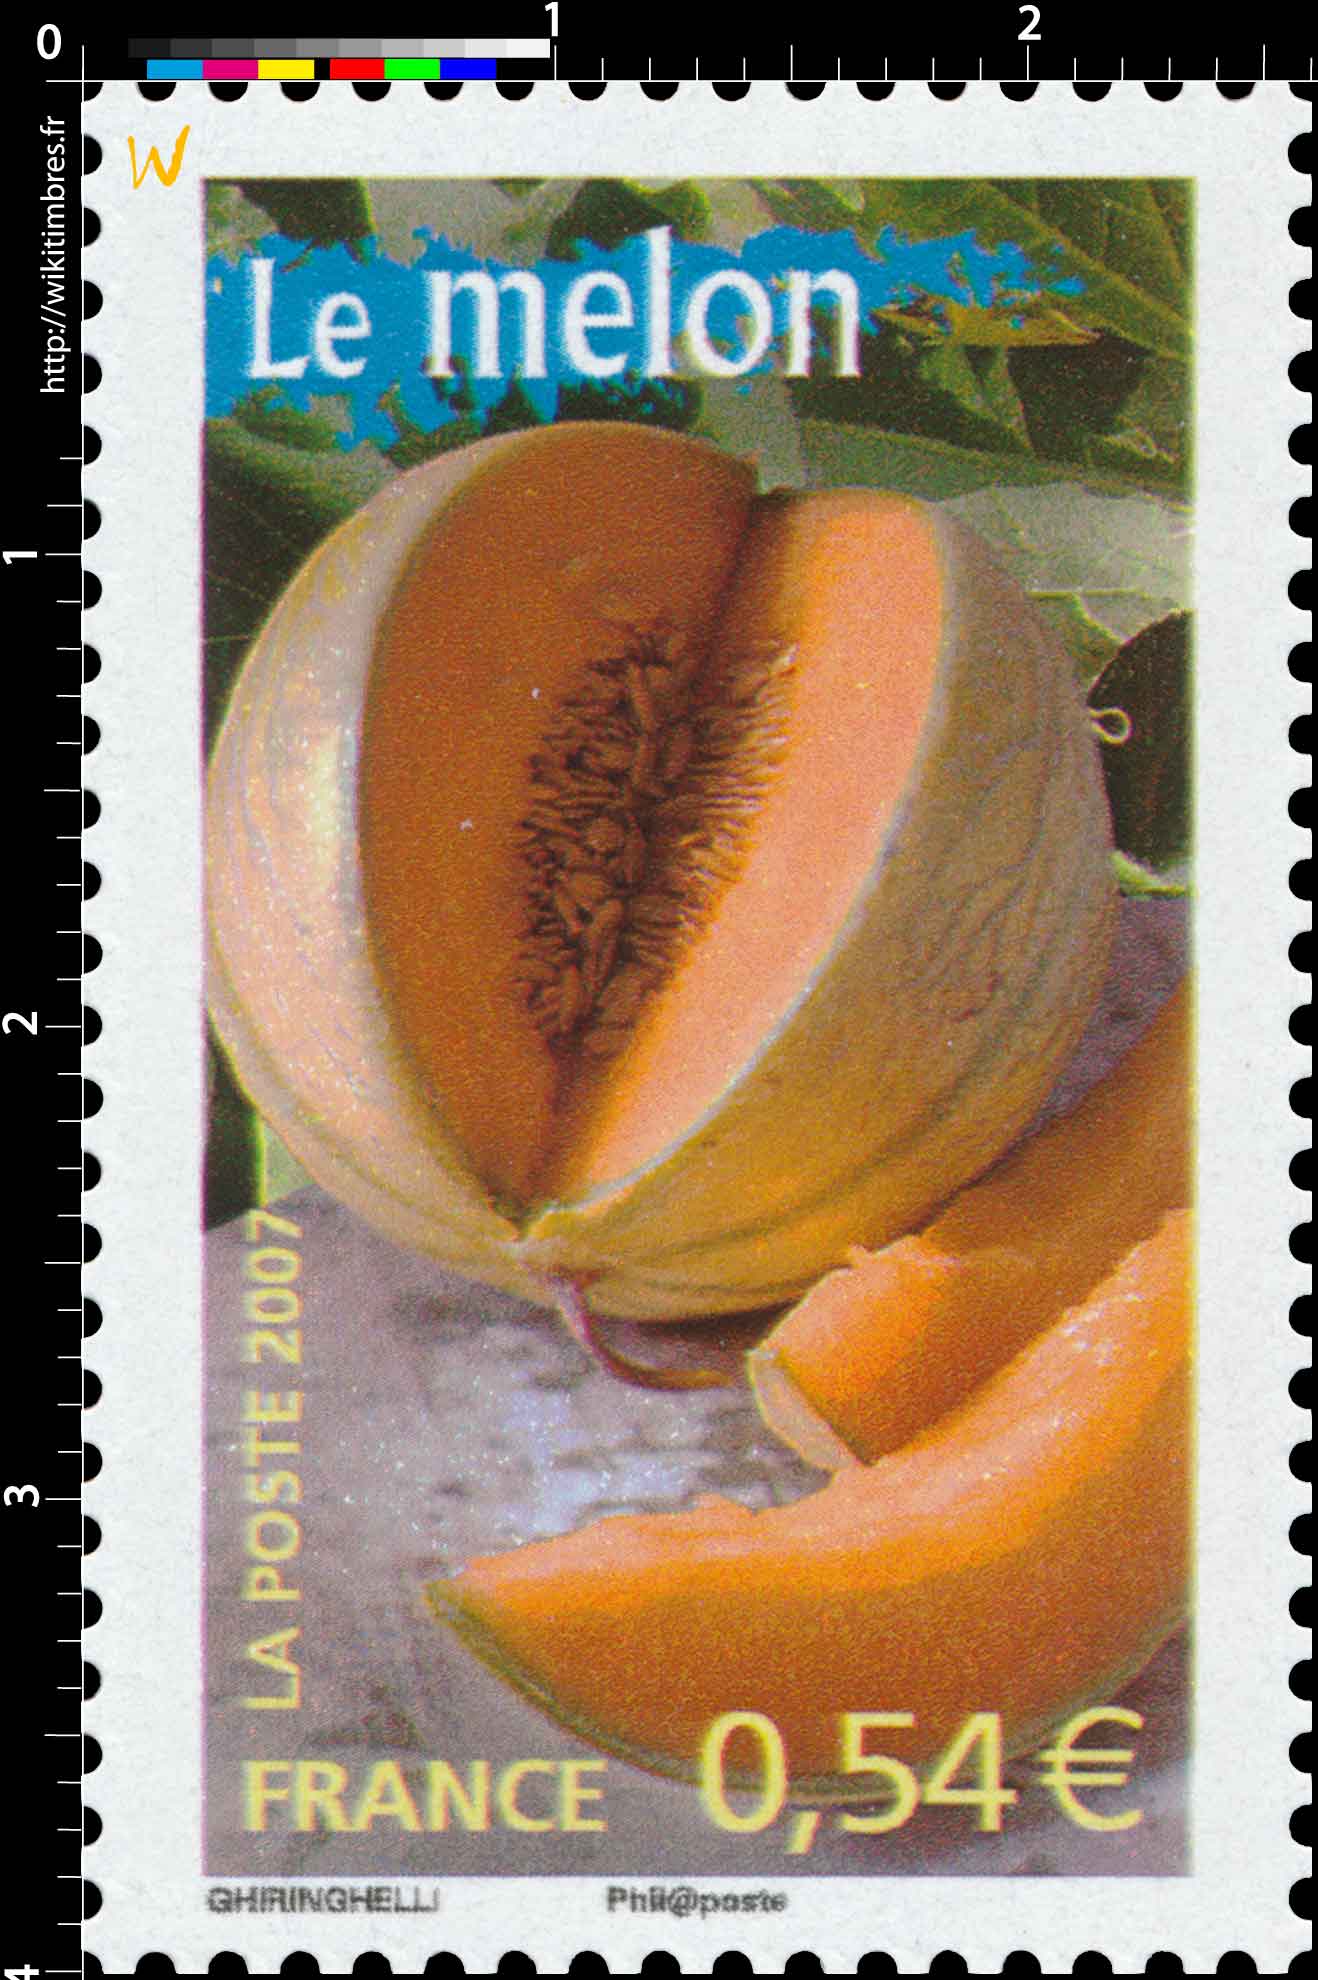 2007 Le melon